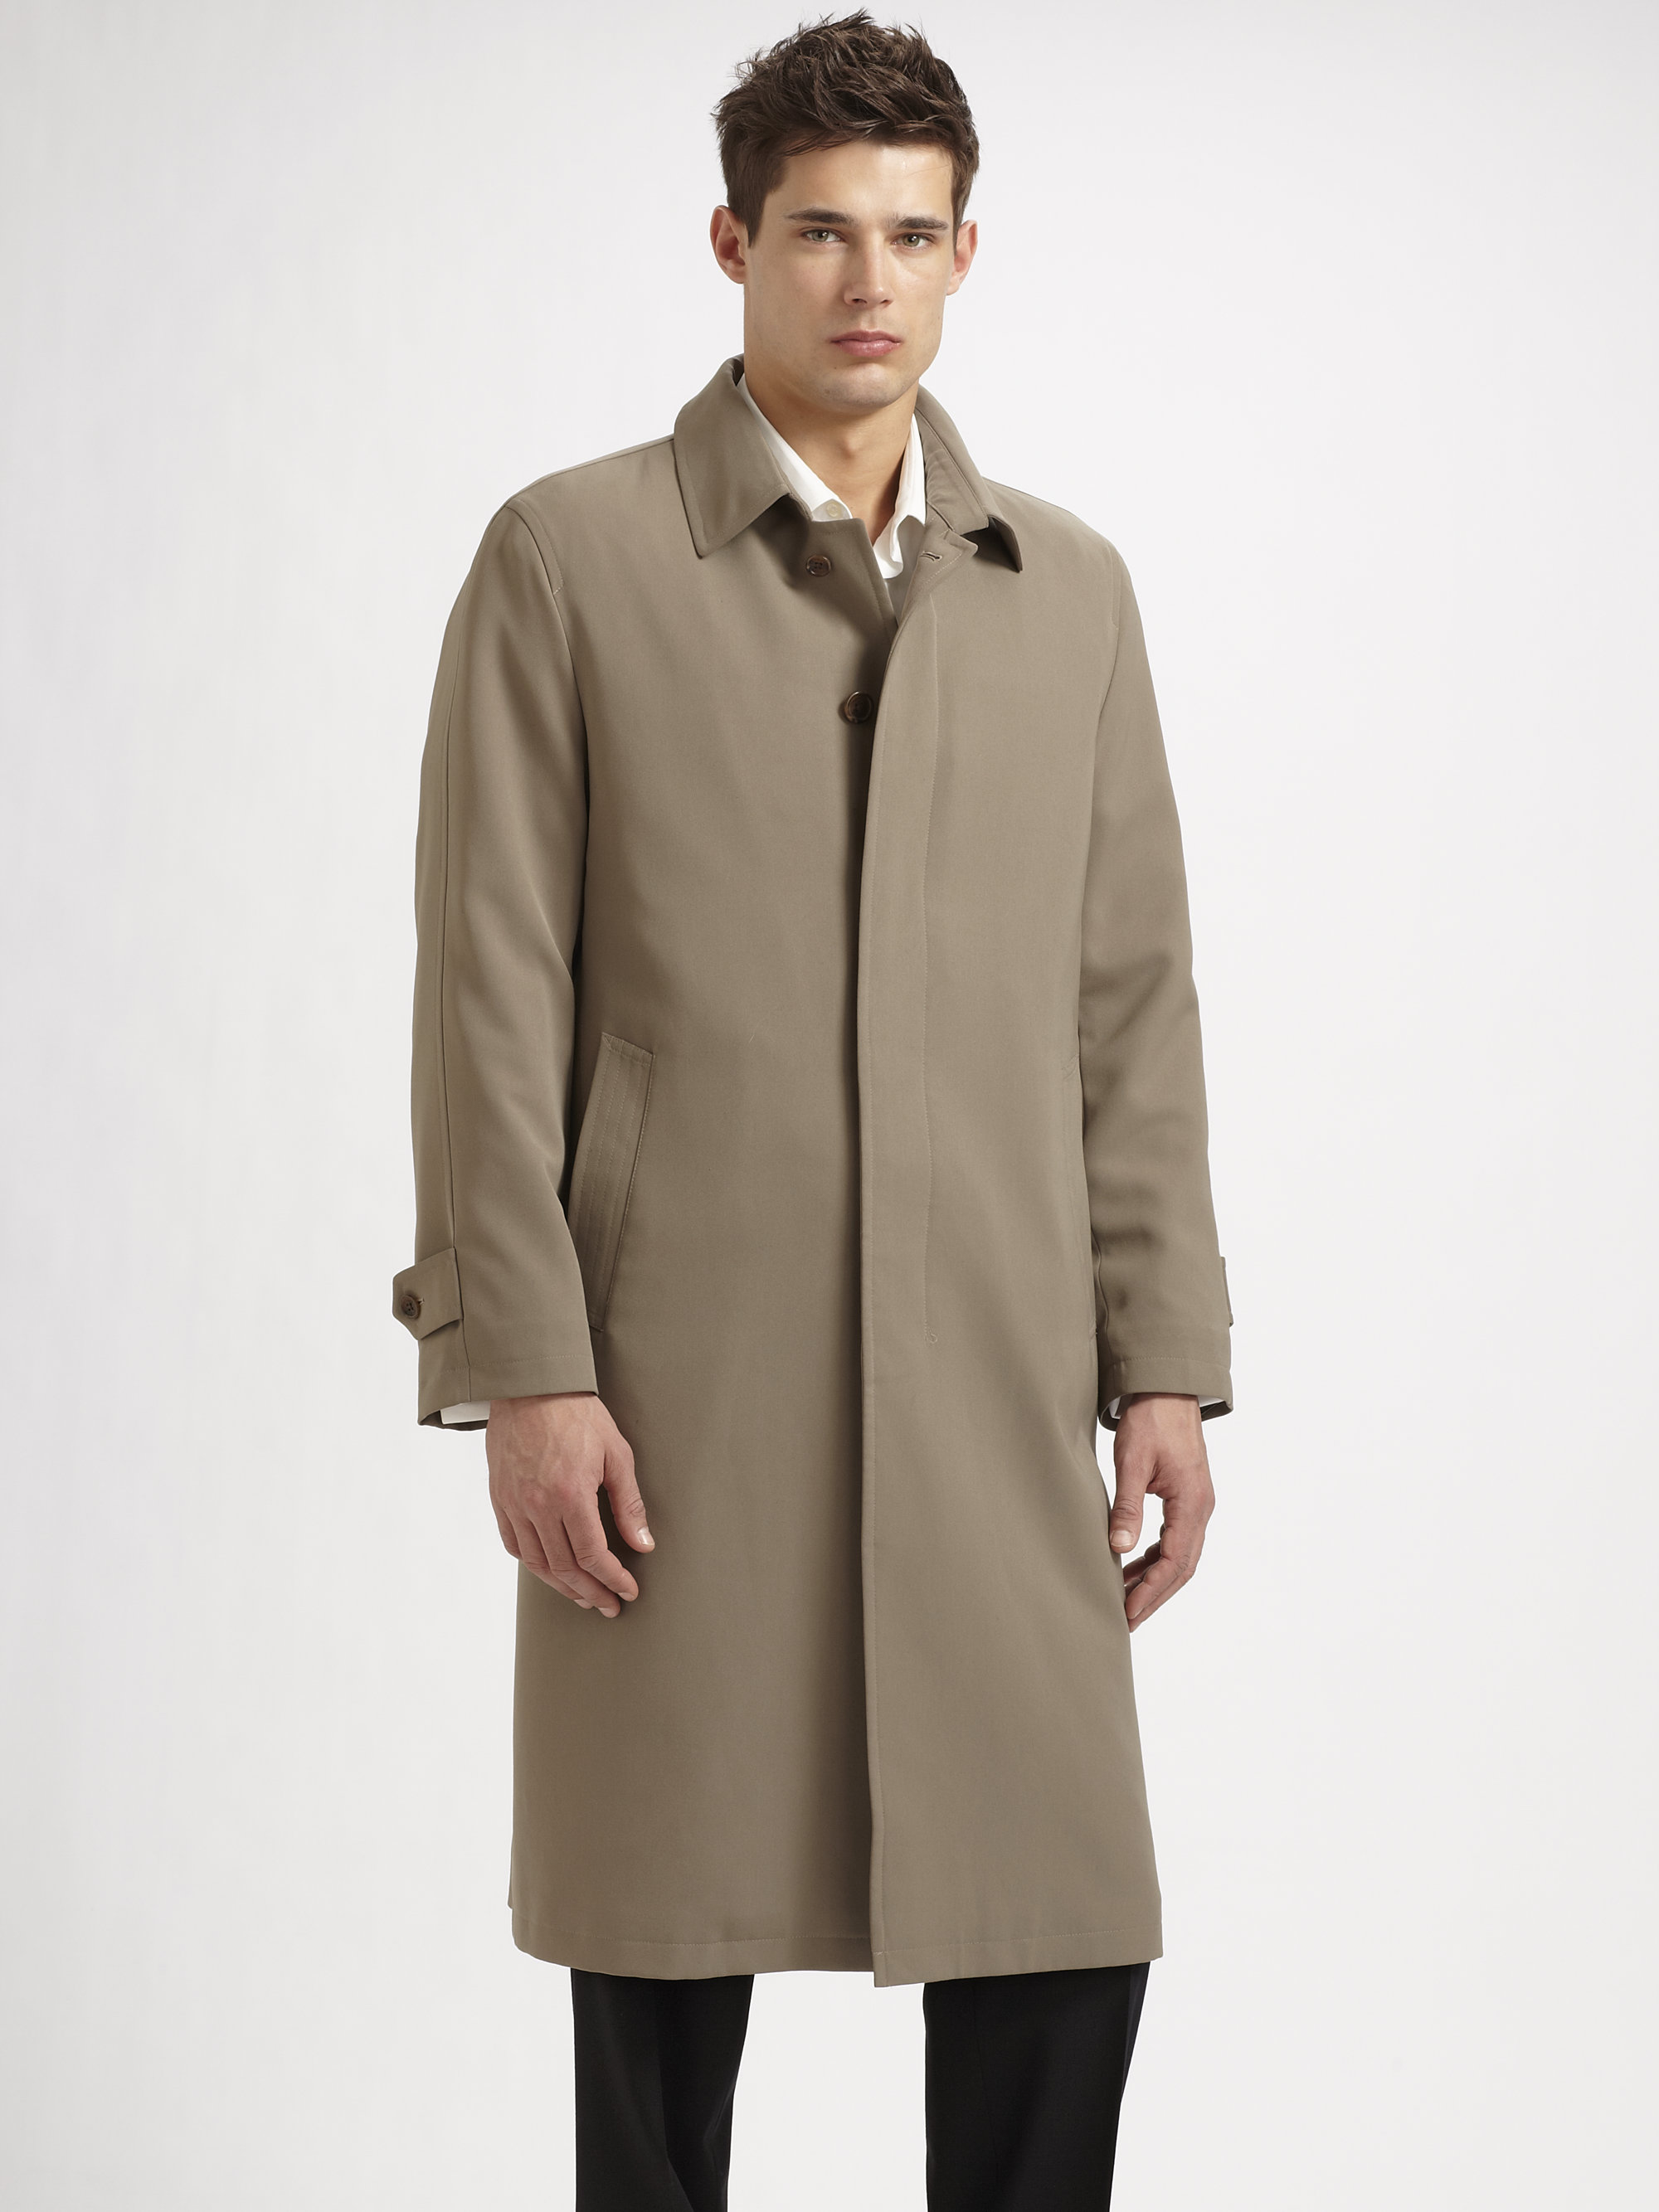 Lyst - Sanyo Caribou Raglan Raincoat in Brown for Men